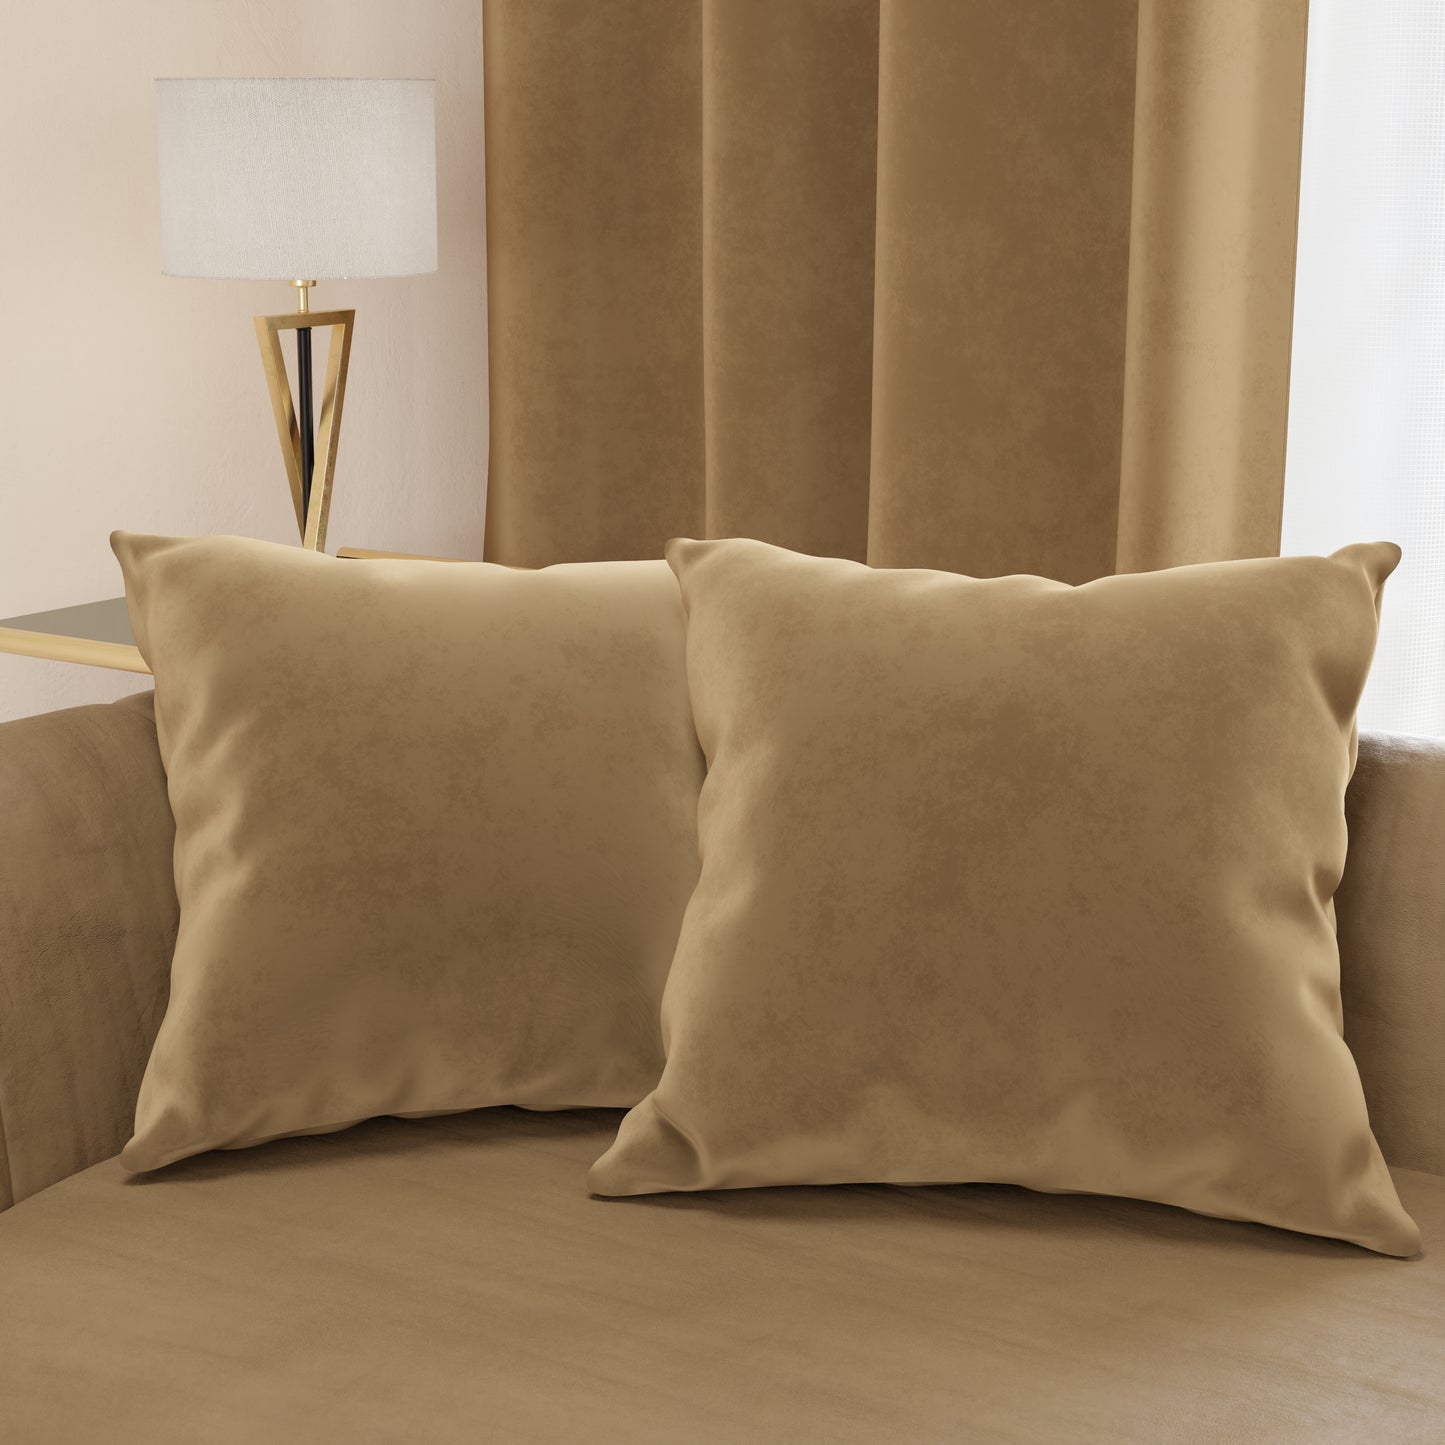 Cushions, Sofa Cushion Covers, Furnishing Cushions in Dove Gray Velvet 2pcs